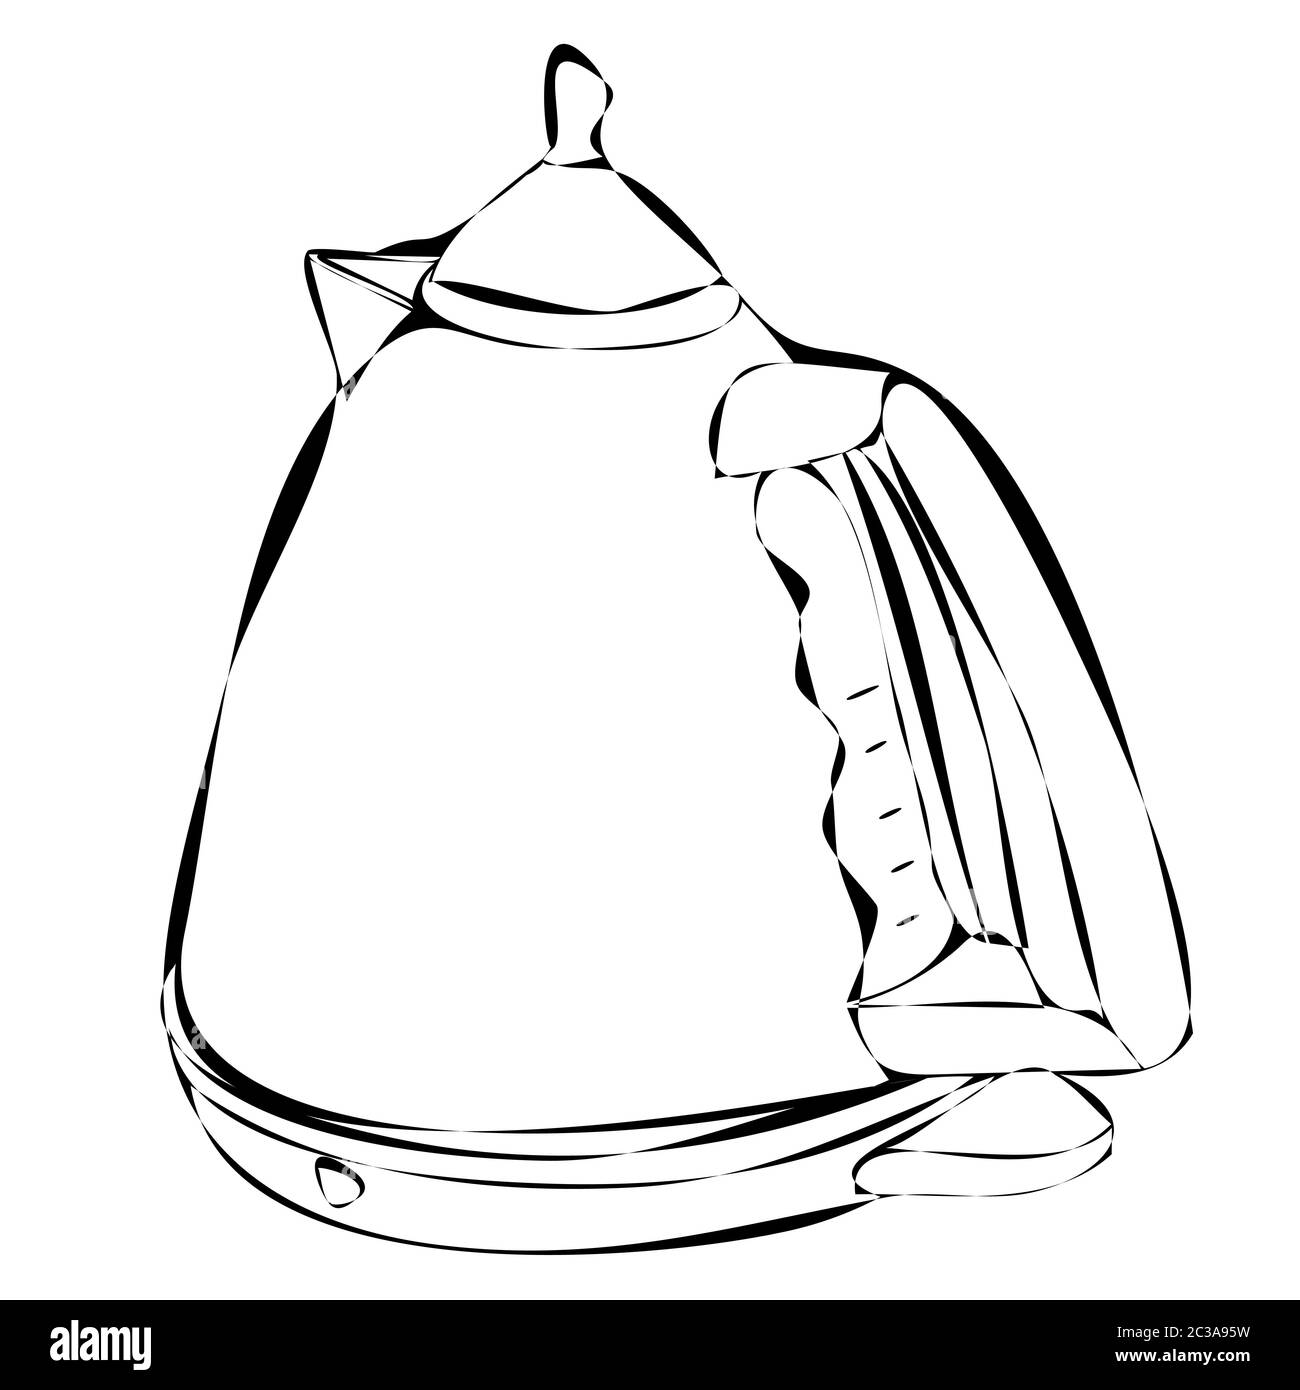 electric kettle sketch, contour, lines Stock Vector Image & Art - Alamy